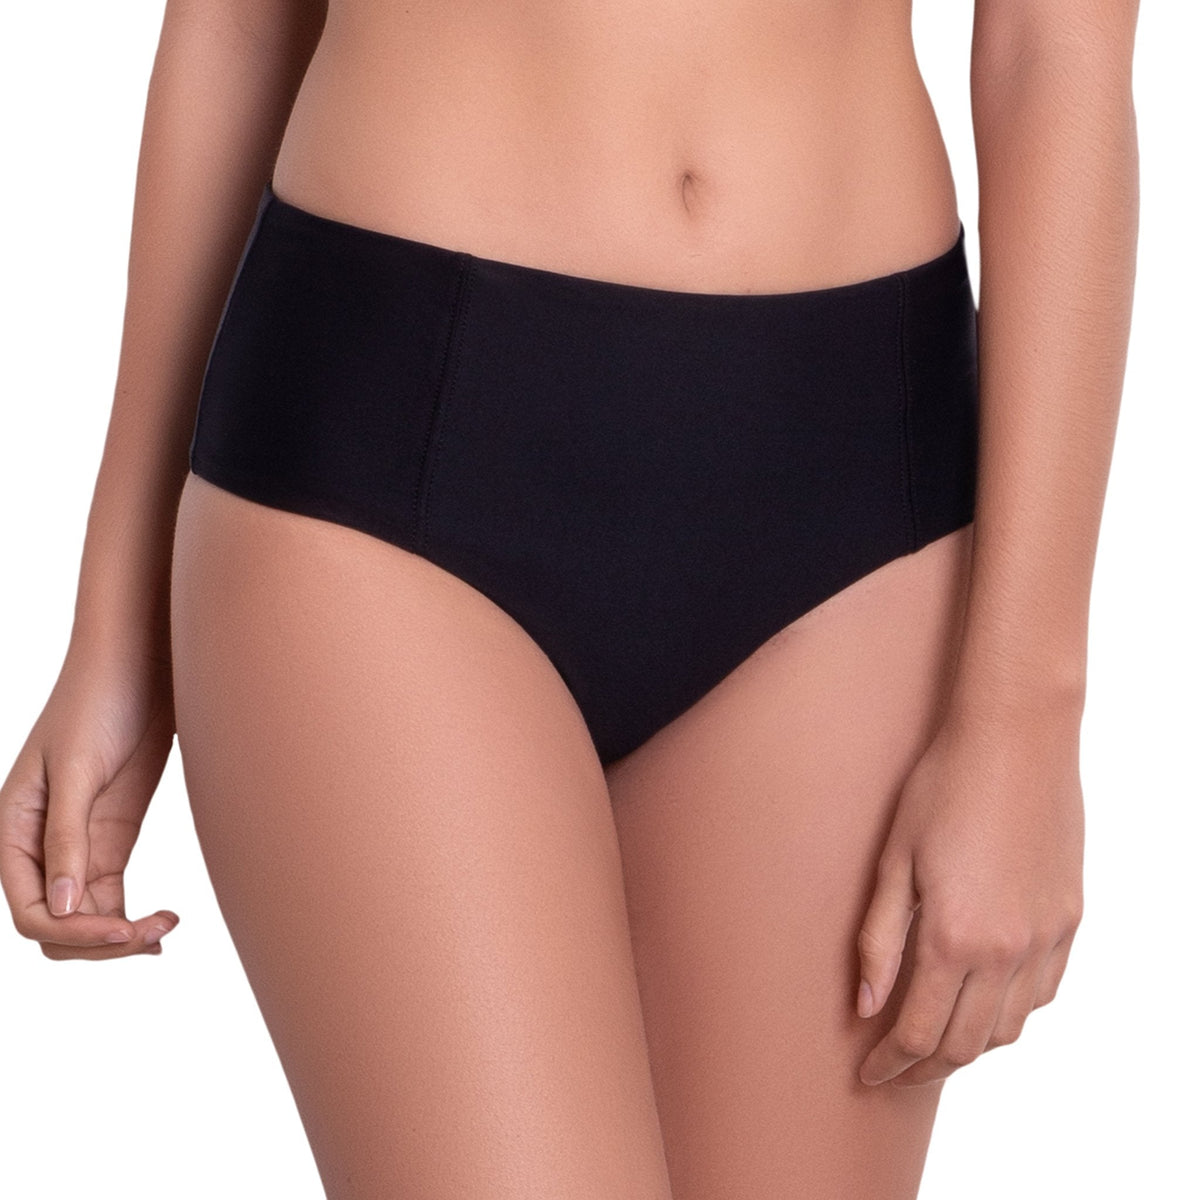 L√âA High rise panty, solid black bikini bottom by ALMA swimwear ‚Äì front view 2